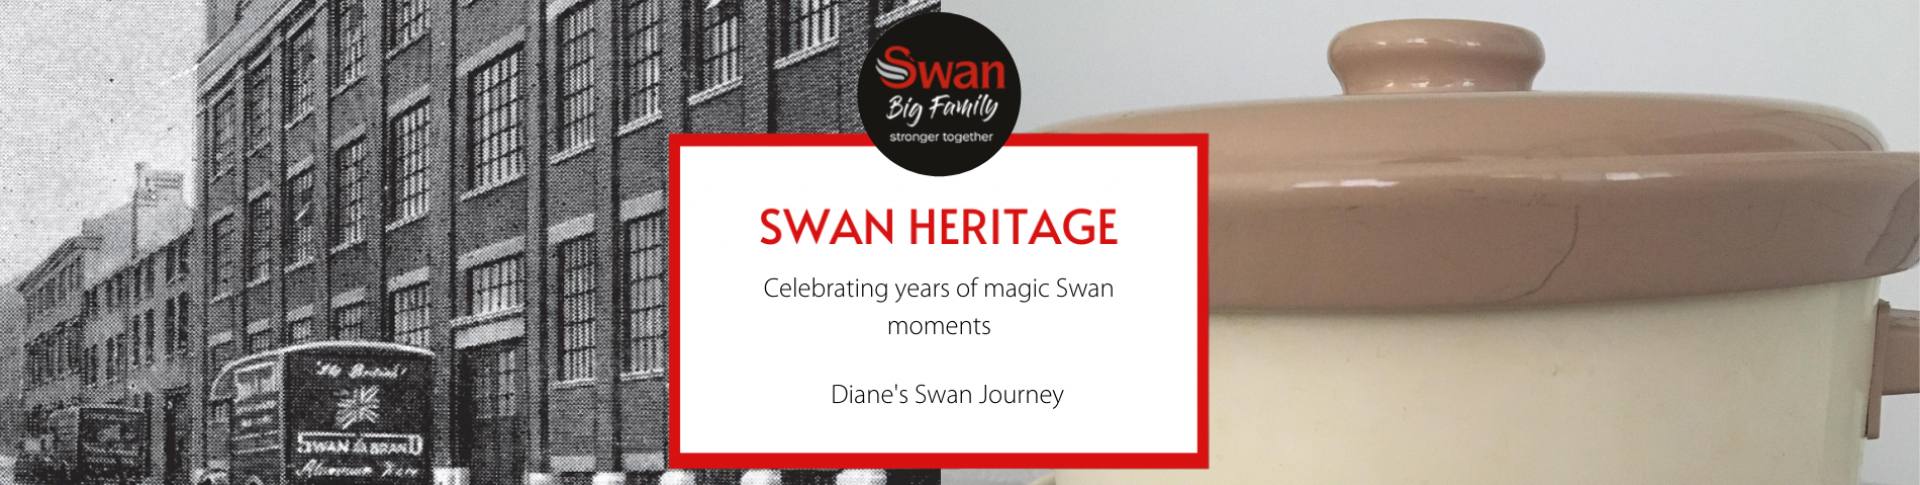 Swan heritage